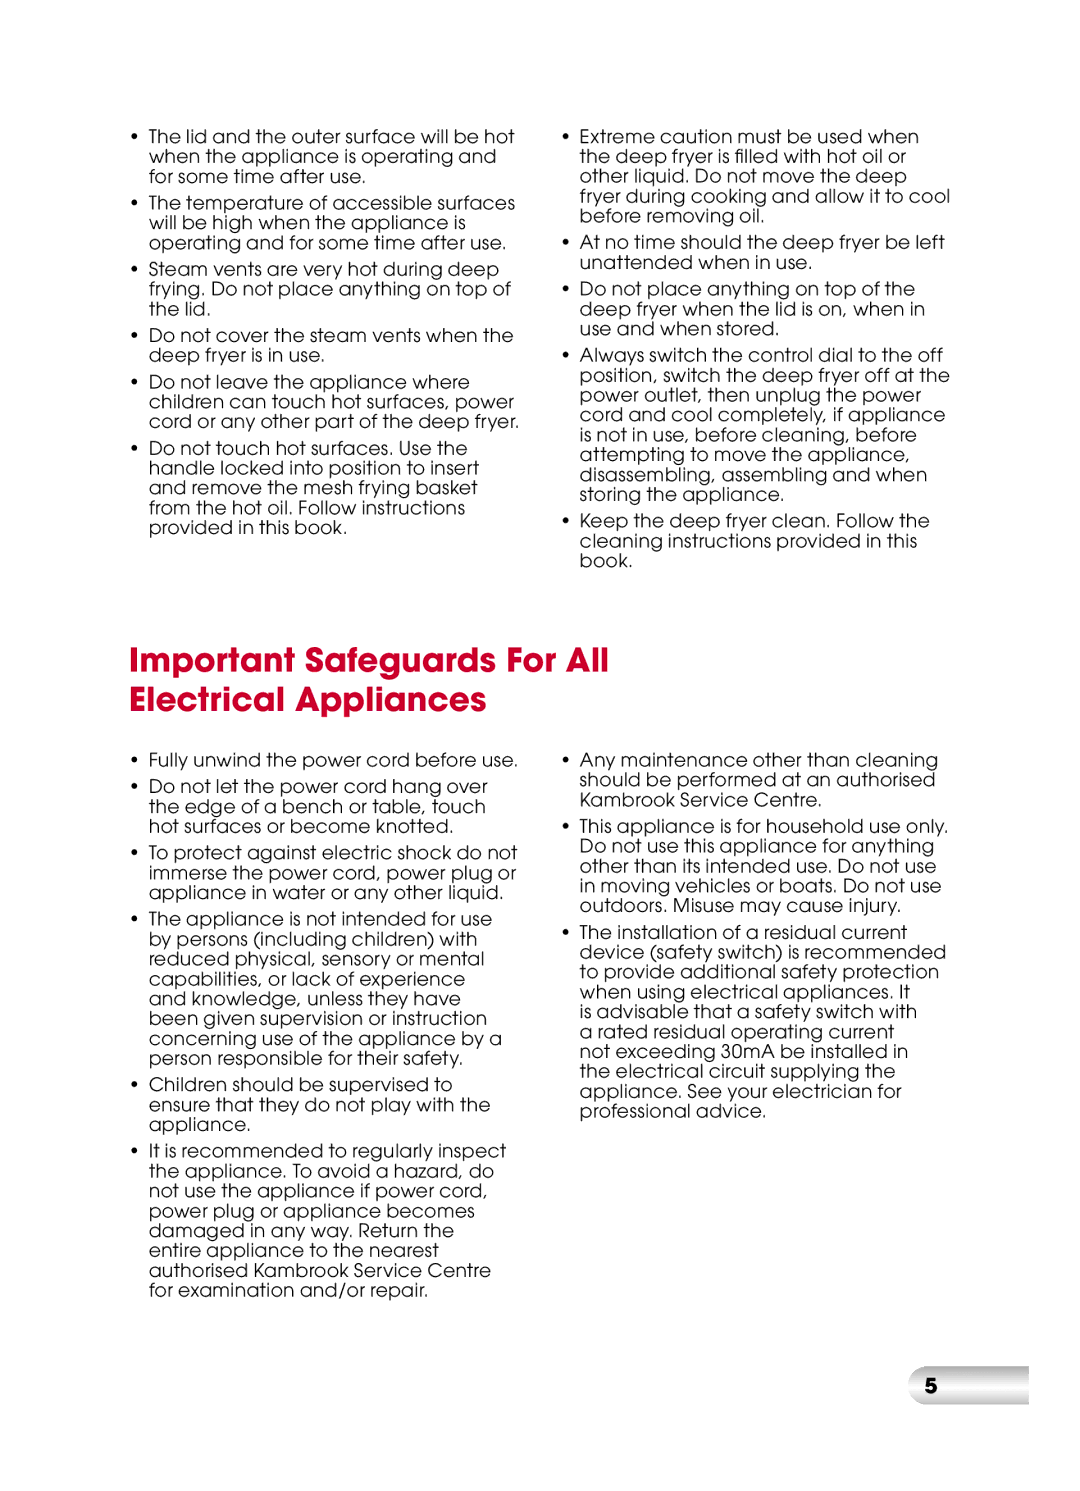 Kambrook KDF560, KDF460 manual Important Safeguards For All Electrical Appliances 